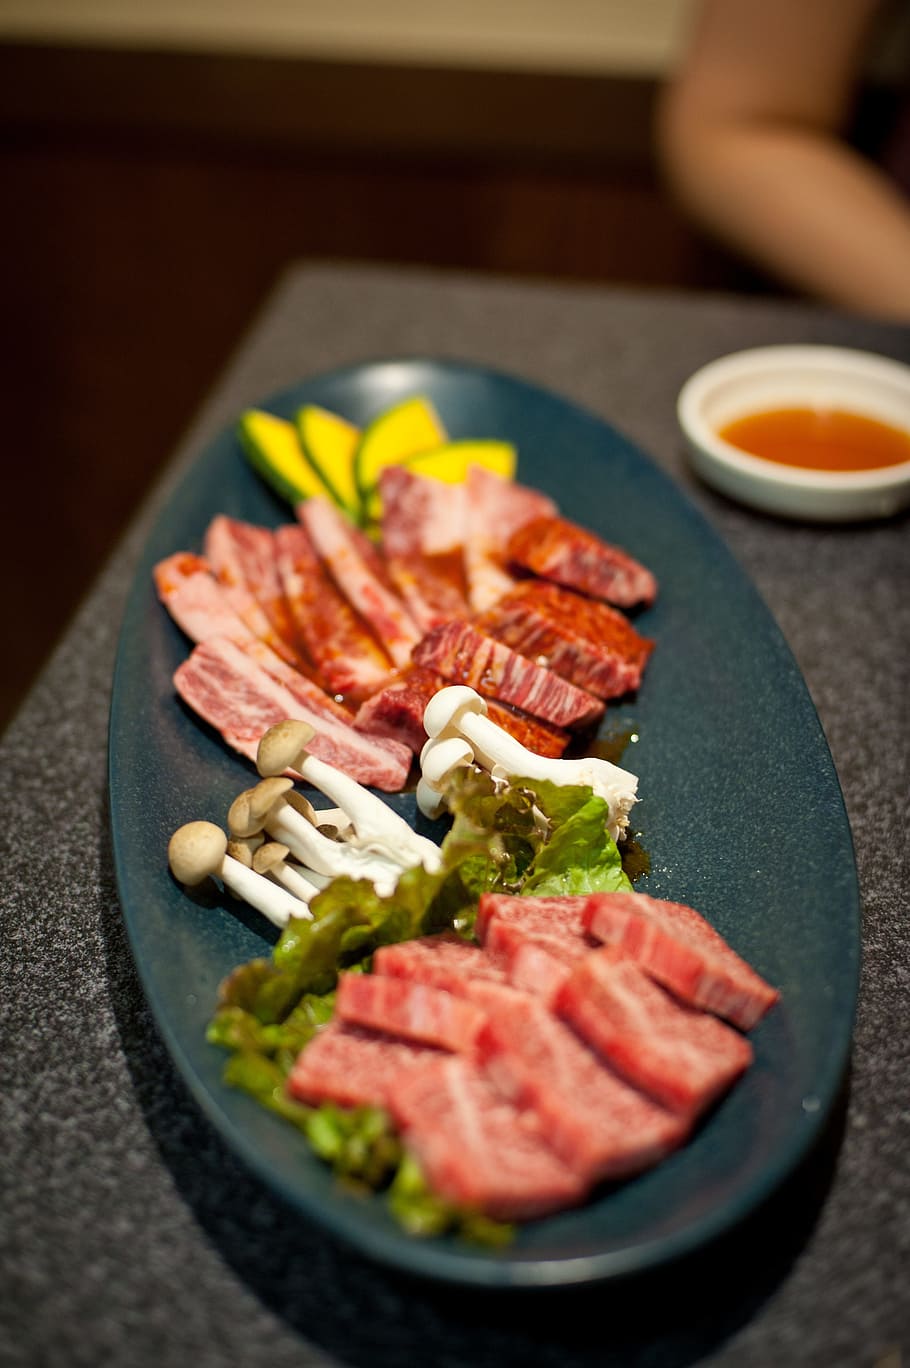 japan beef, beef, kyoto restaurants, beef restaurants, kindle copy, food and drink, food, meat, indoors, healthy eating